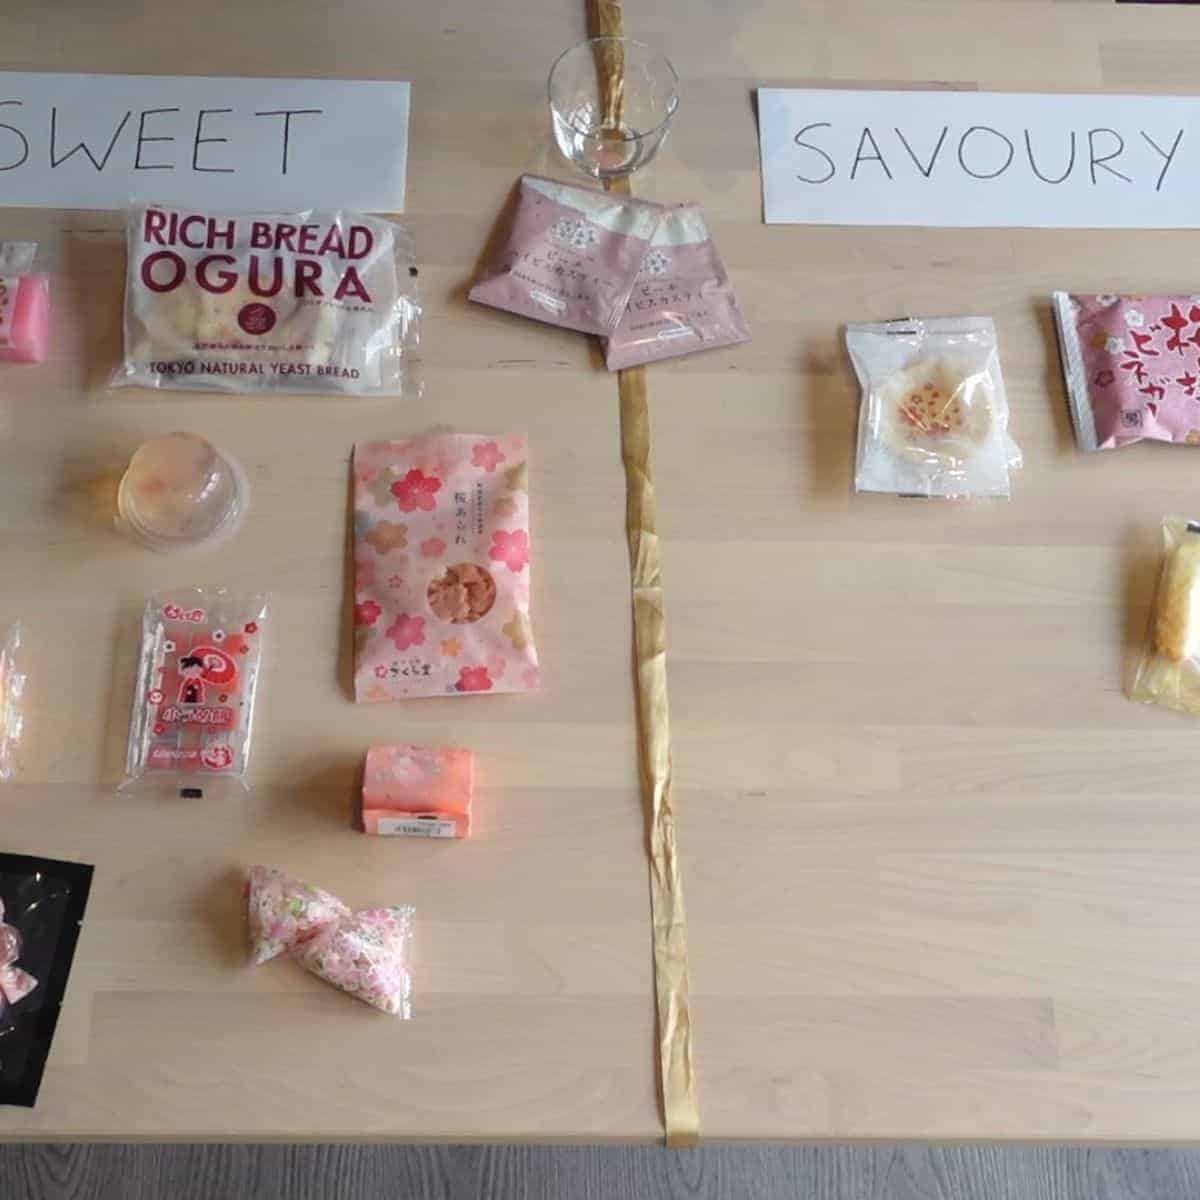 Sweet and savoury treats sakura month